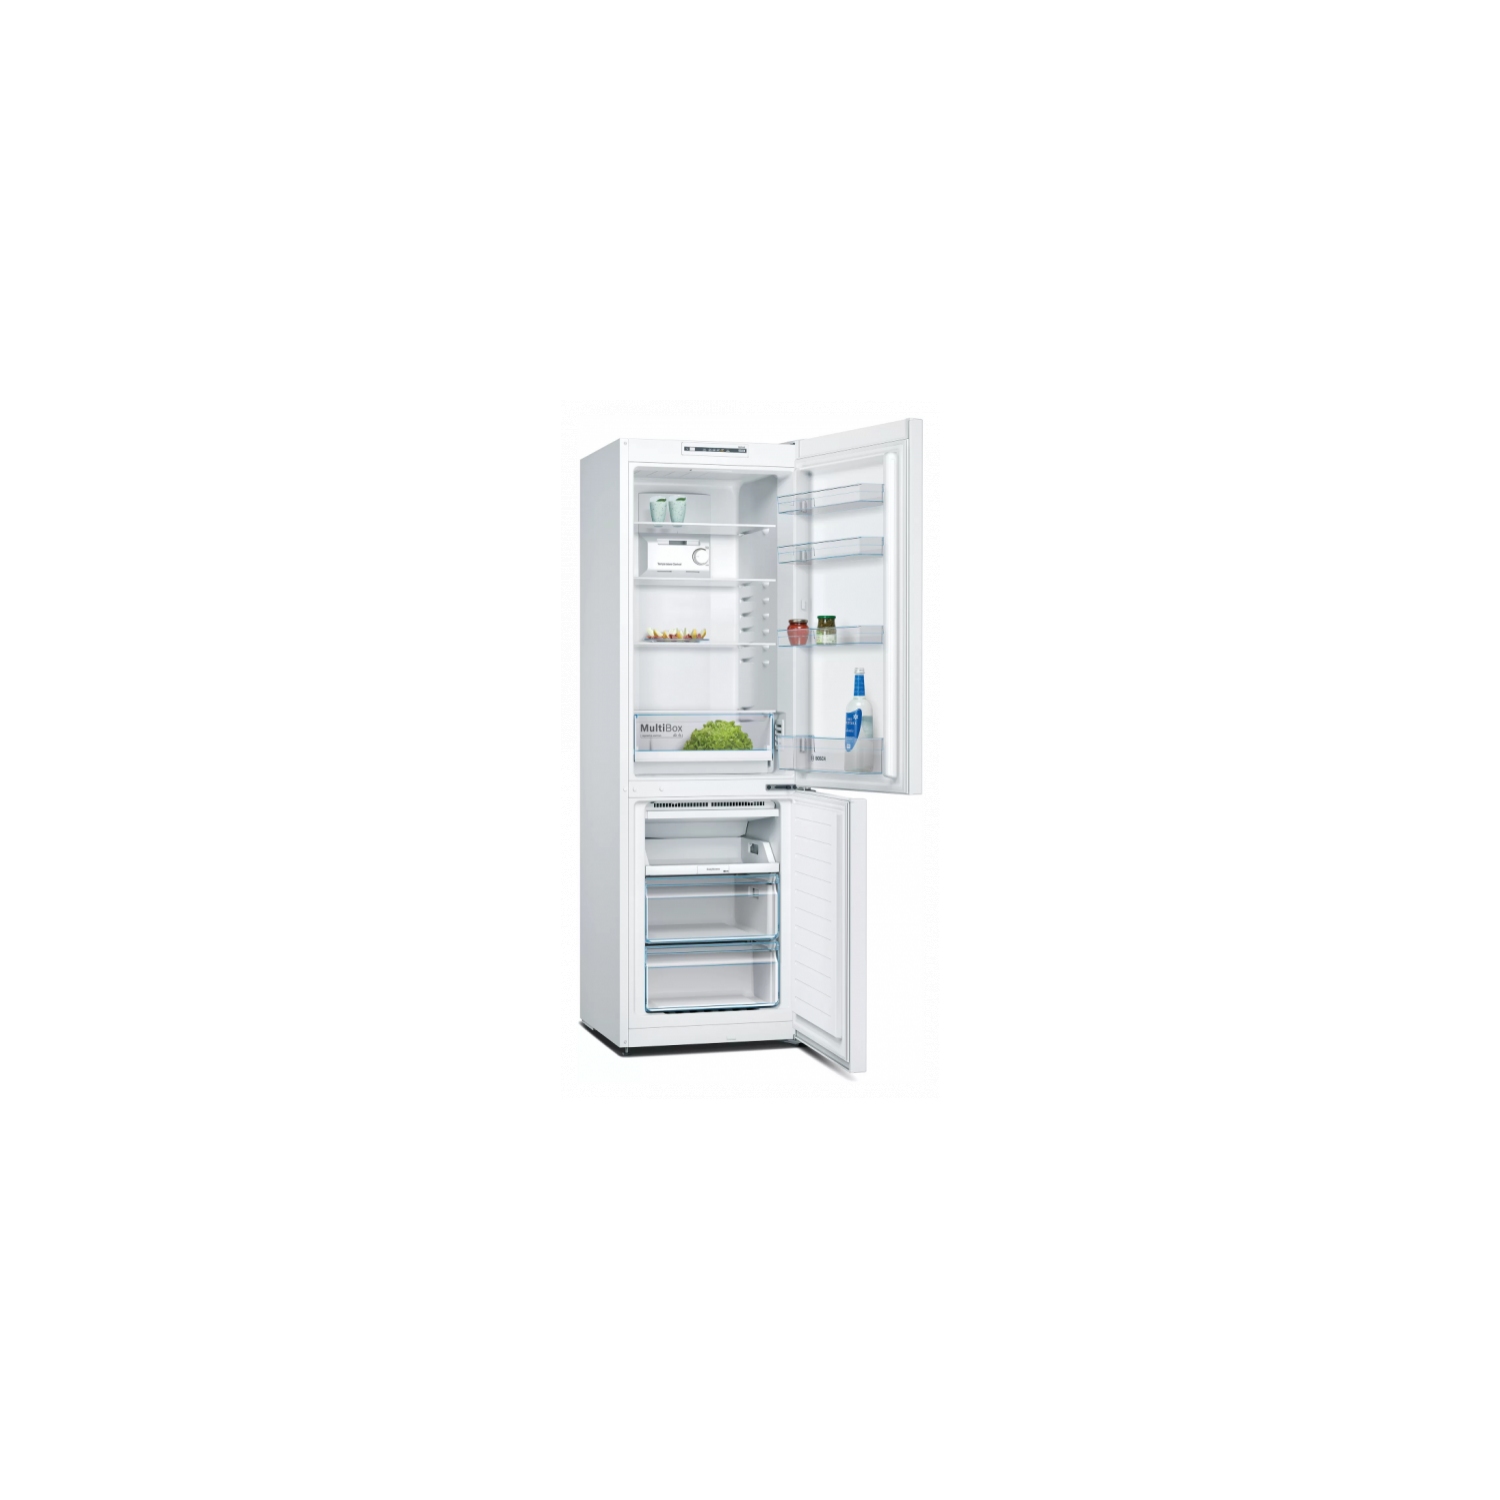 Bosch 186cm tall fridge freezer - 0